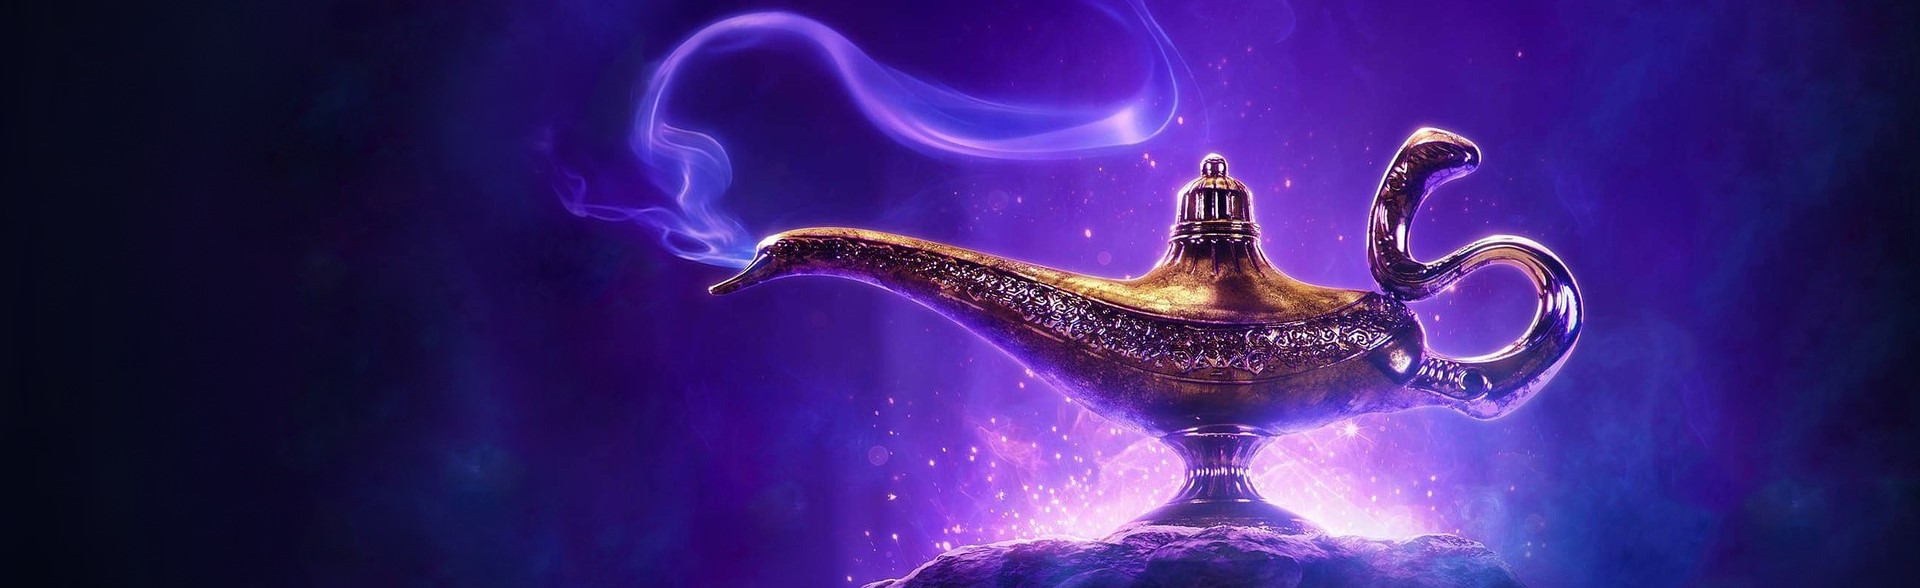 Aladdin (2019) - SPOILER-FREE Review